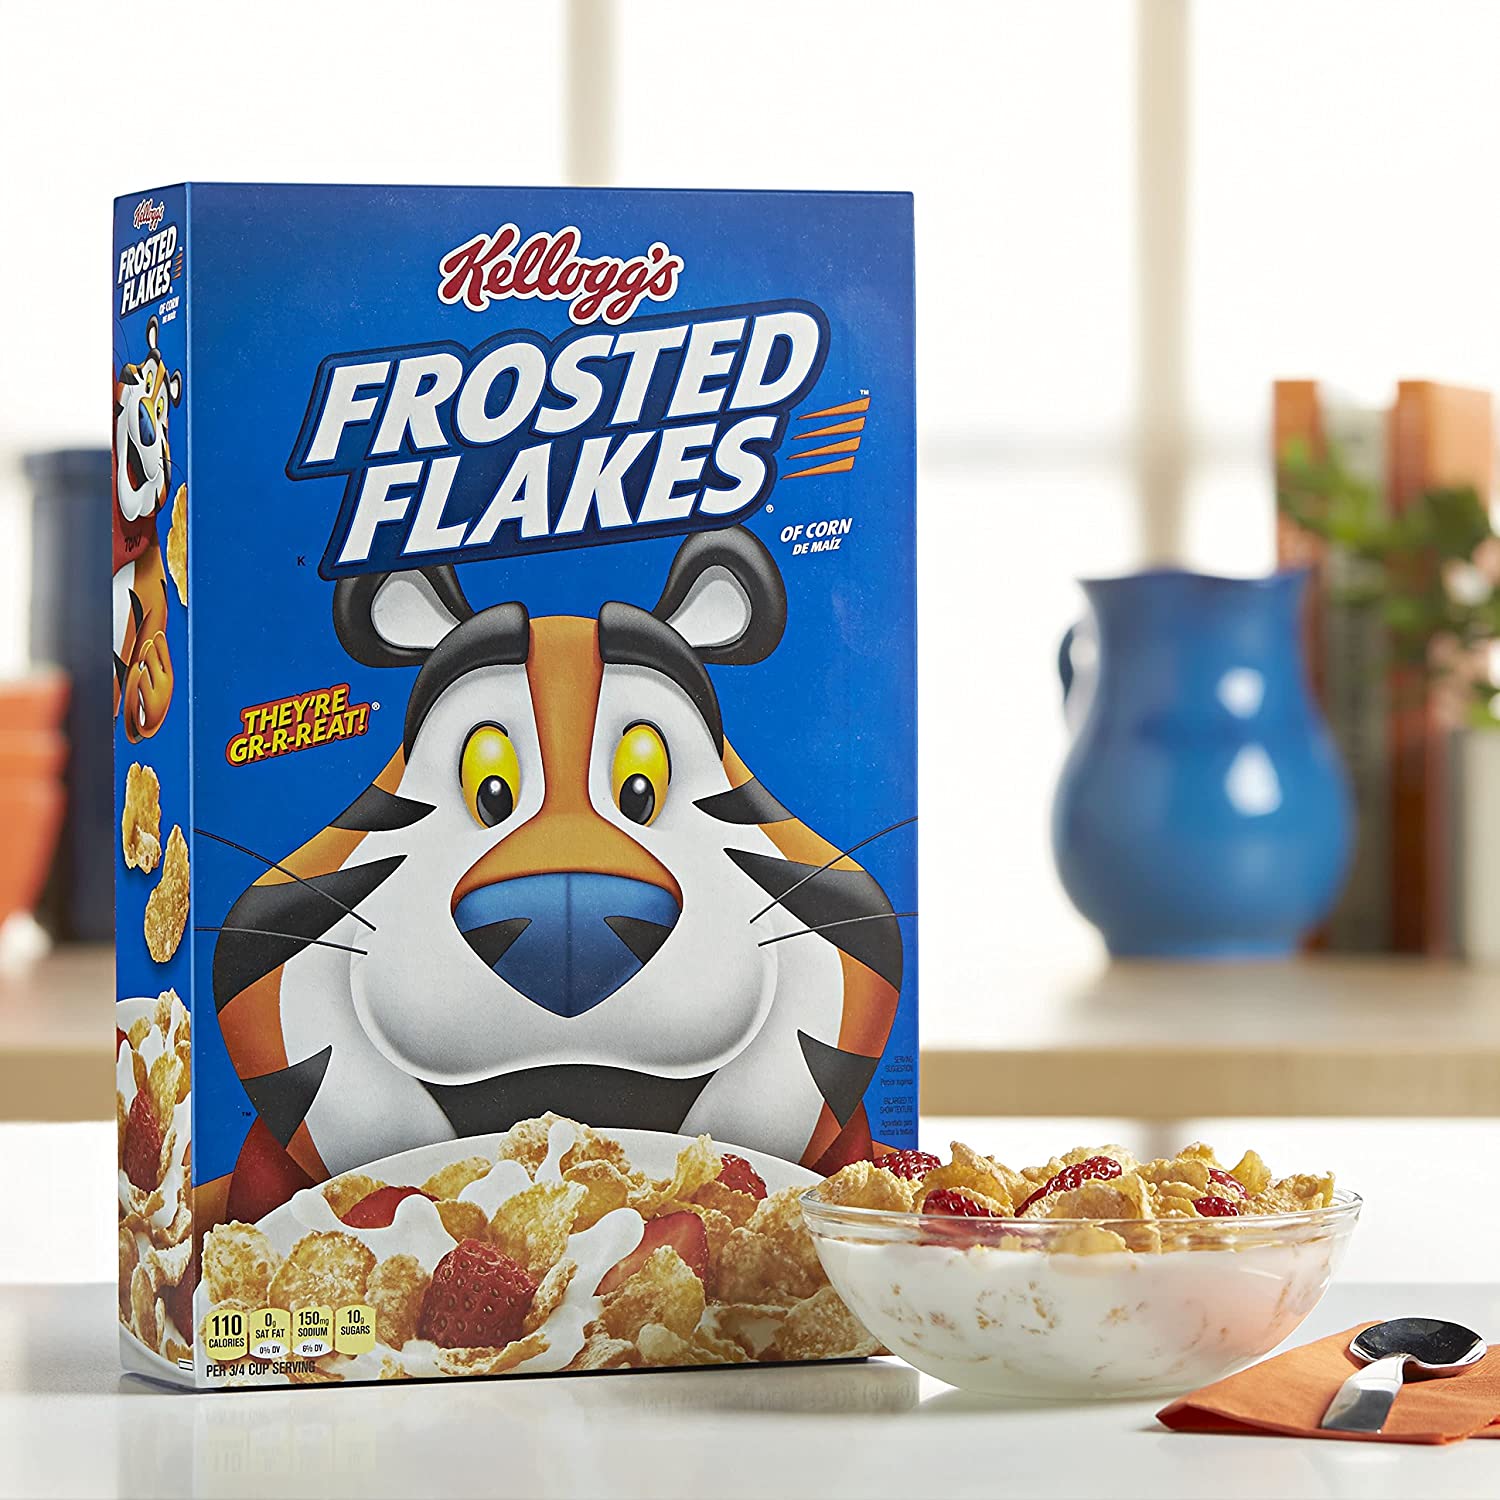 Kellogg's Corn Flakes® cereal